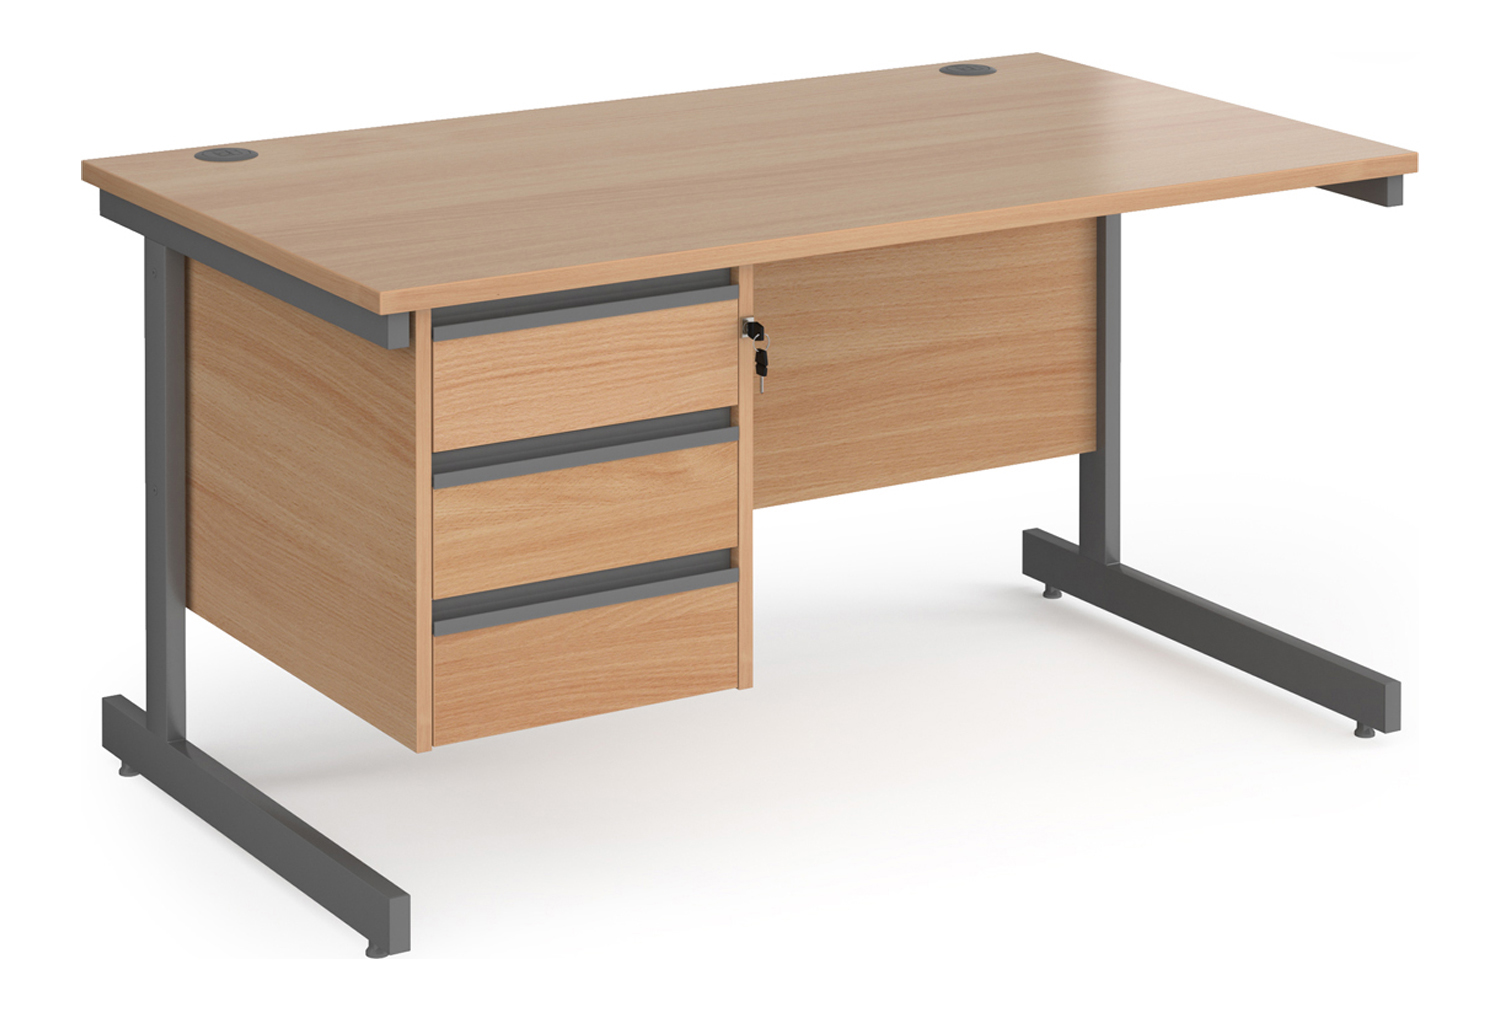 Value Line Classic+ Rectangular C-Leg Office Desk 3 Drawers (Graphite Leg), 140wx80dx73h (cm), Beech, Express Delivery